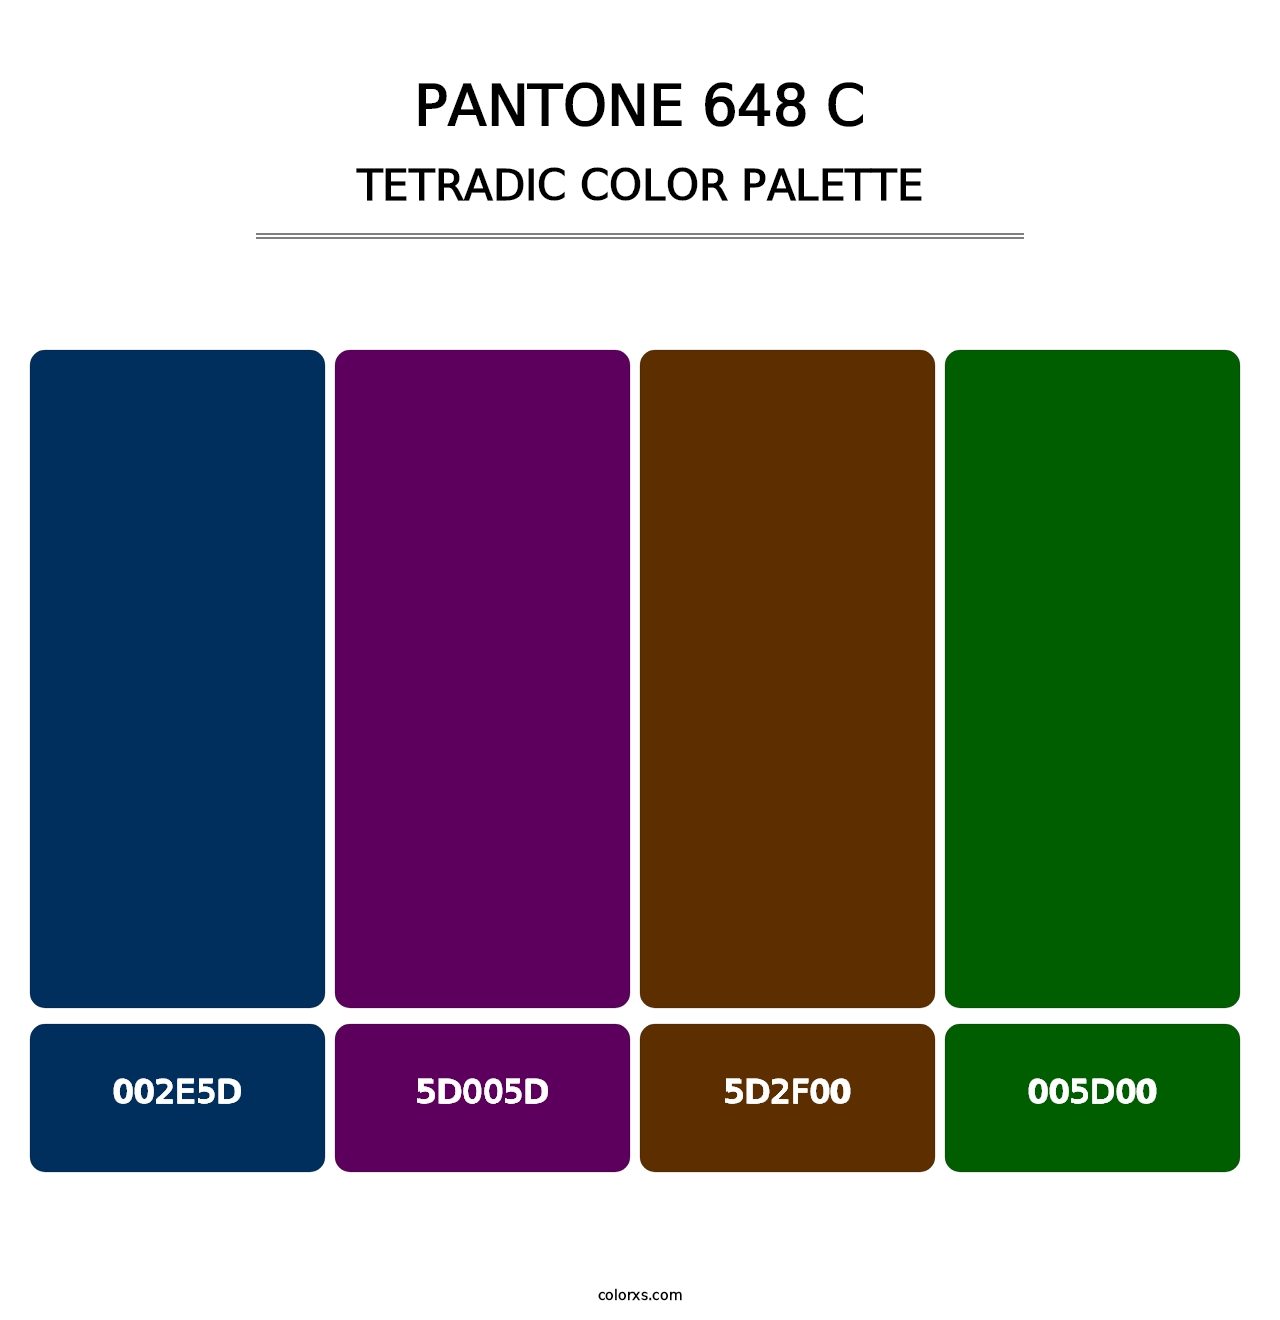 PANTONE 648 C - Tetradic Color Palette